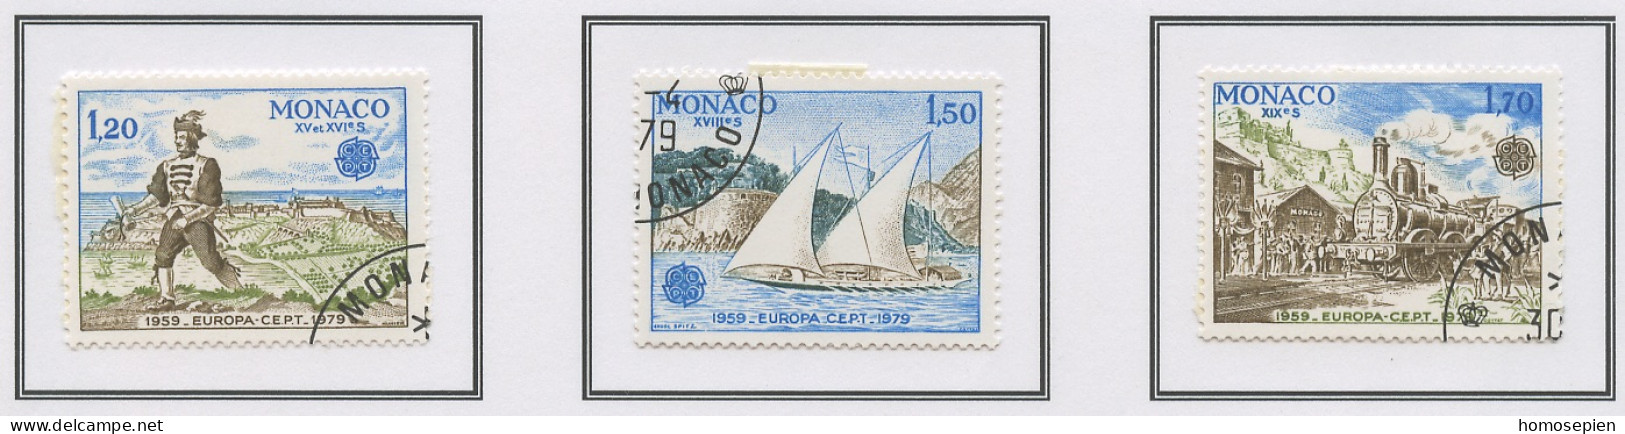 Europa CEPT 1979 Monaco Y&T N°1186a à 1188a - Michel N°1375C à 1377C (o) - K13*12,5 - 1979